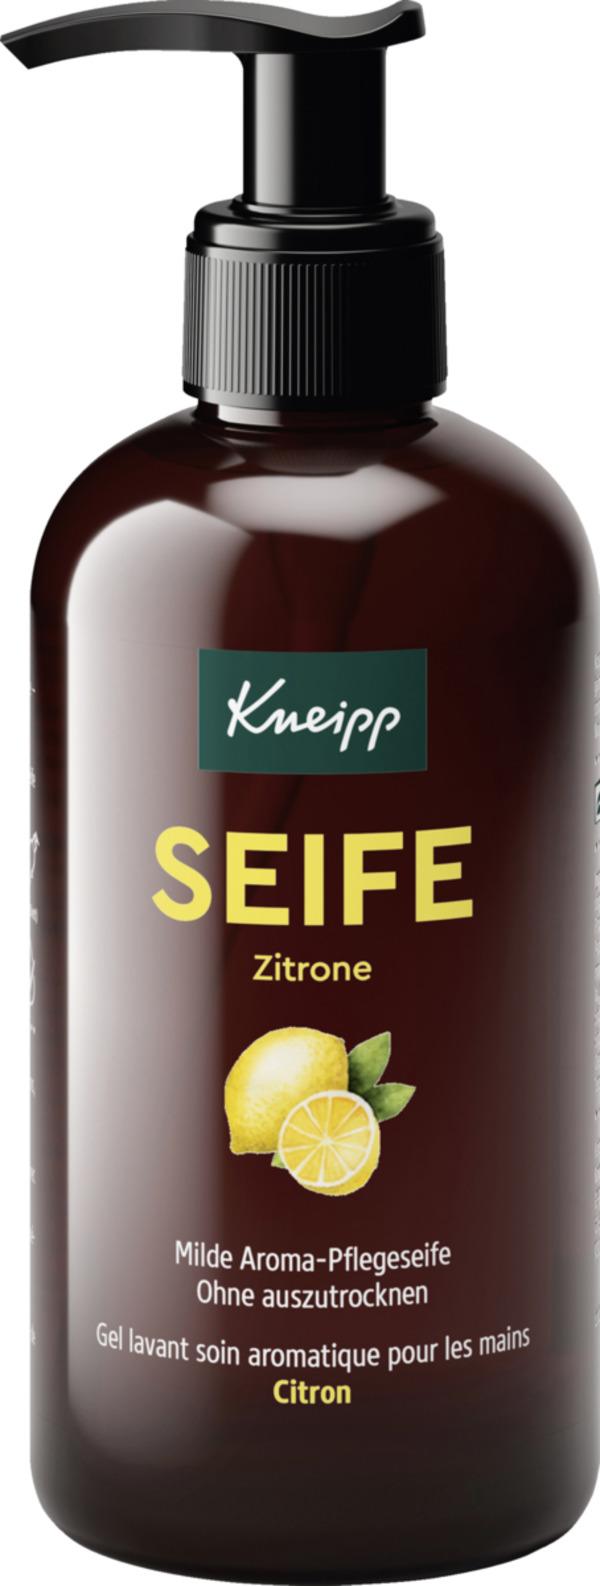 Bild 1 von Kneipp Seife Zitrone Milde Aroma-Pflegeseife